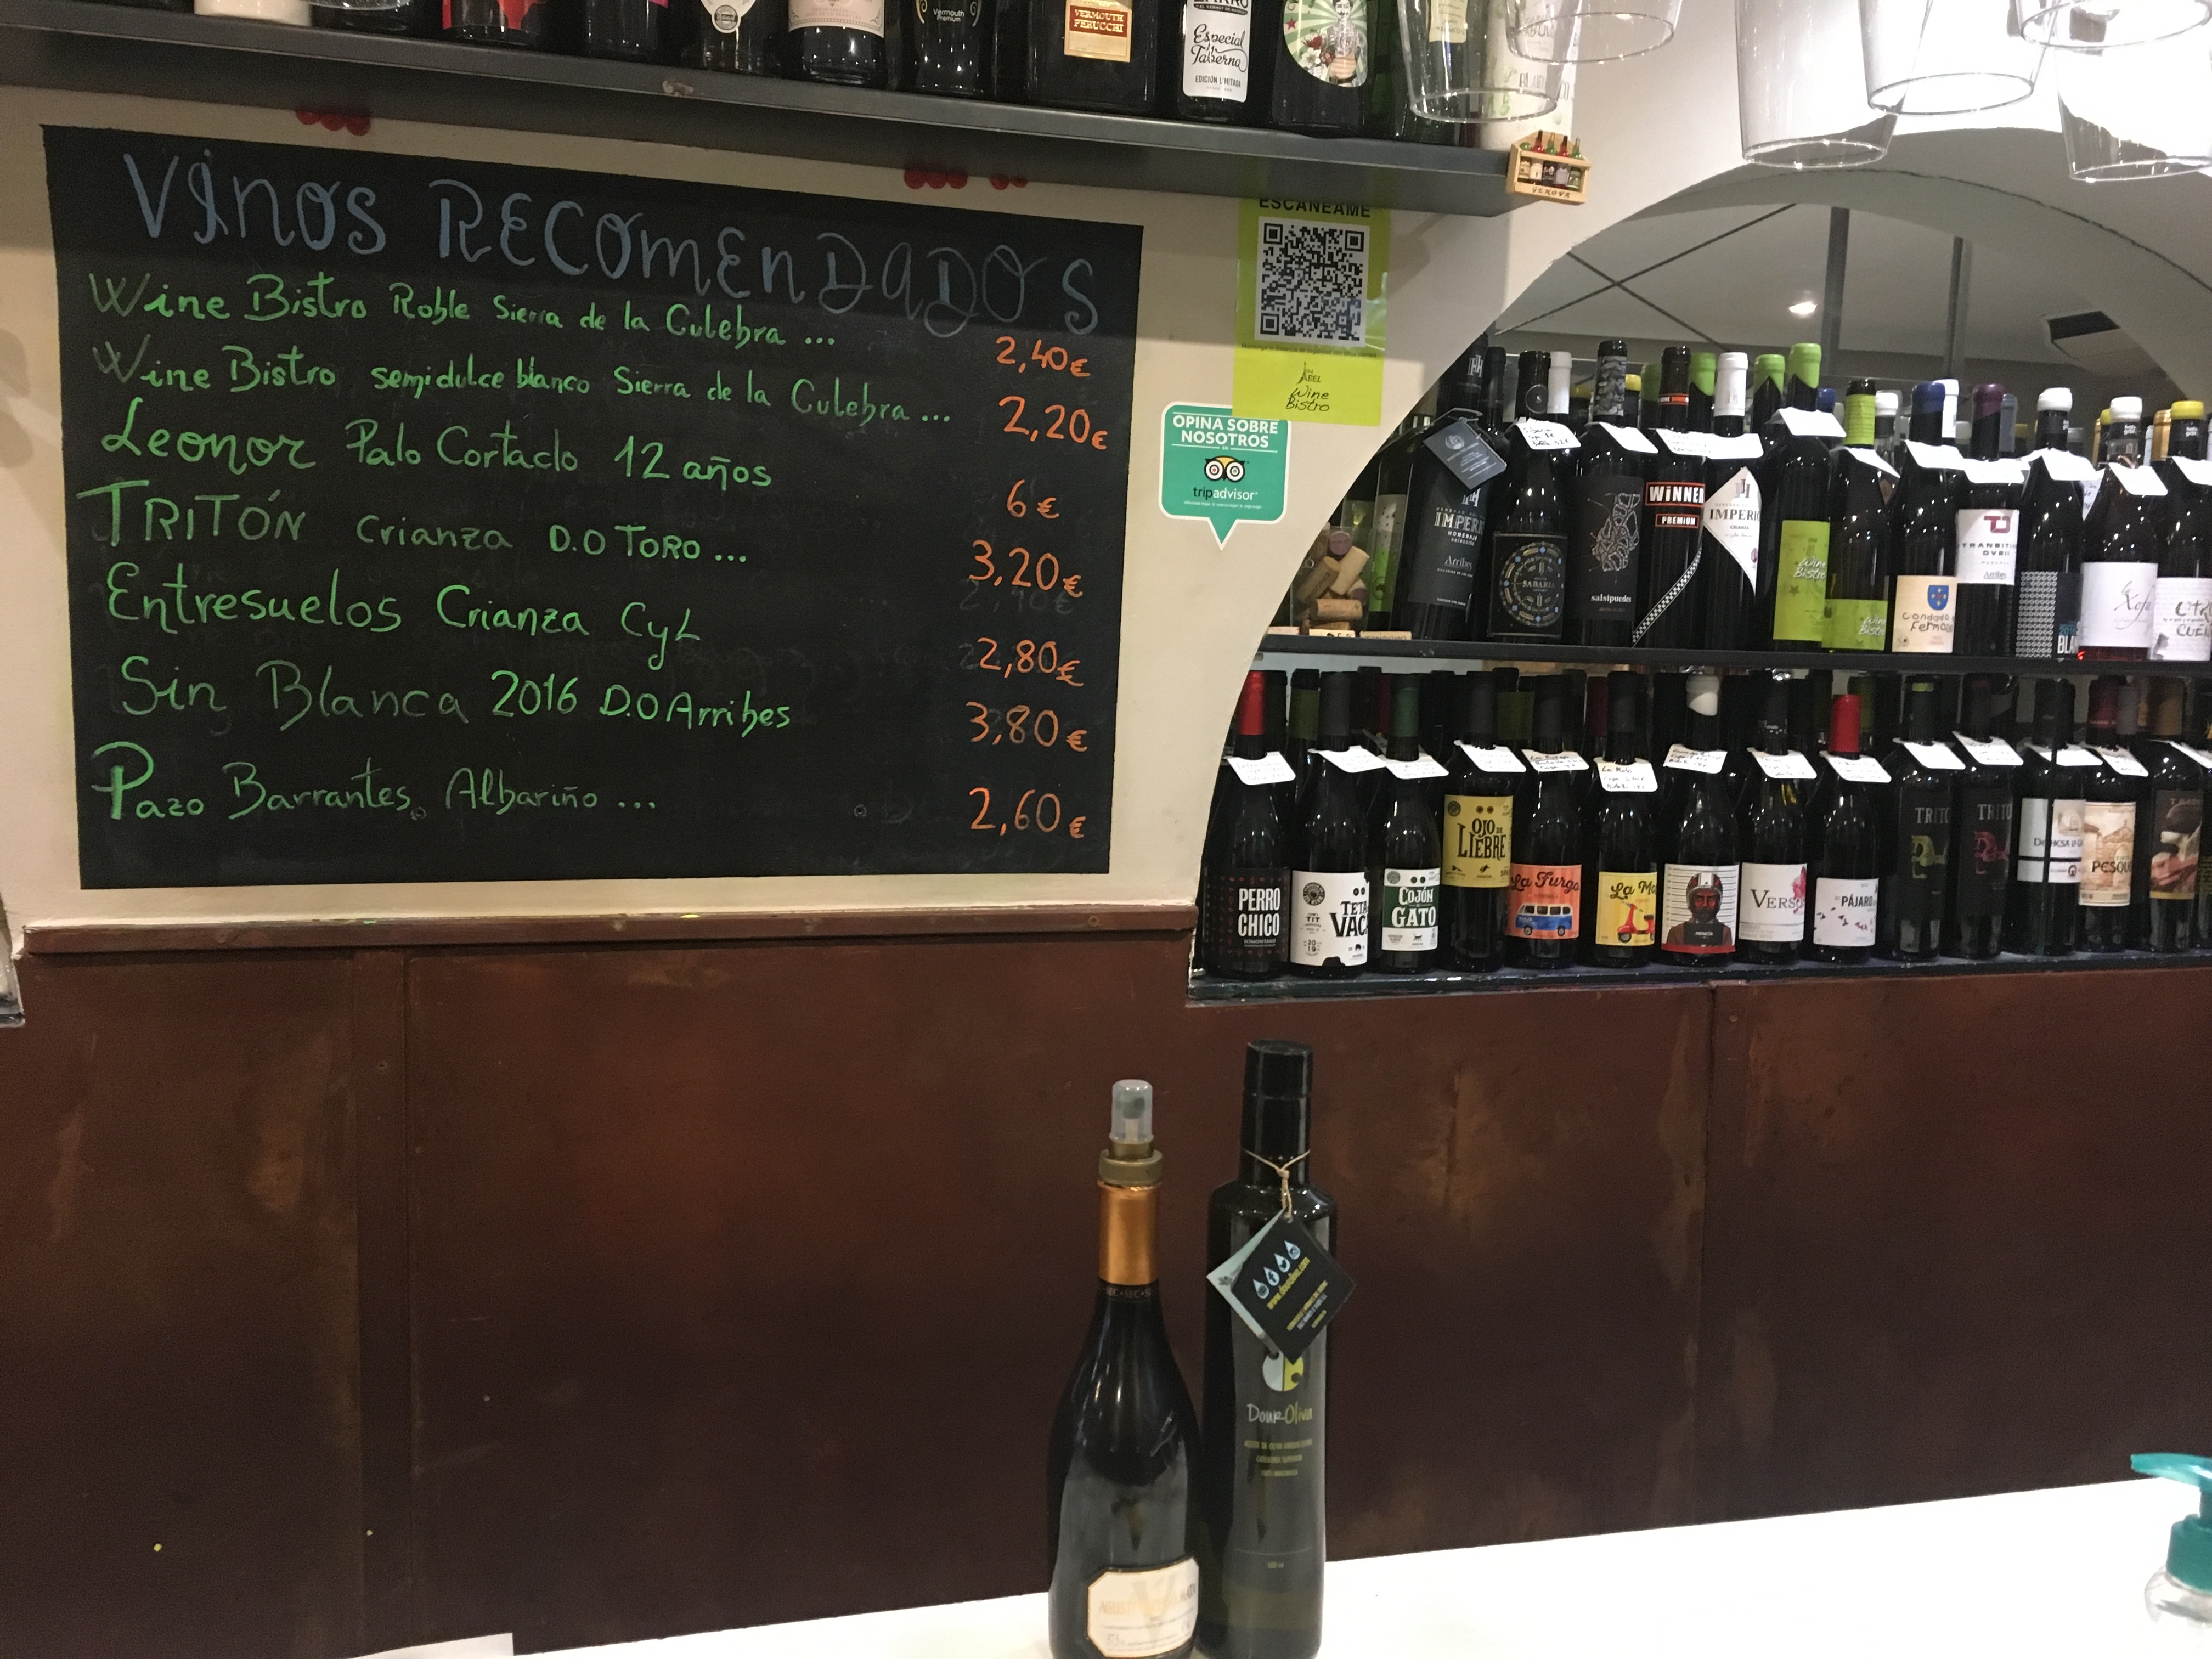 Wine Bistro de Zamora